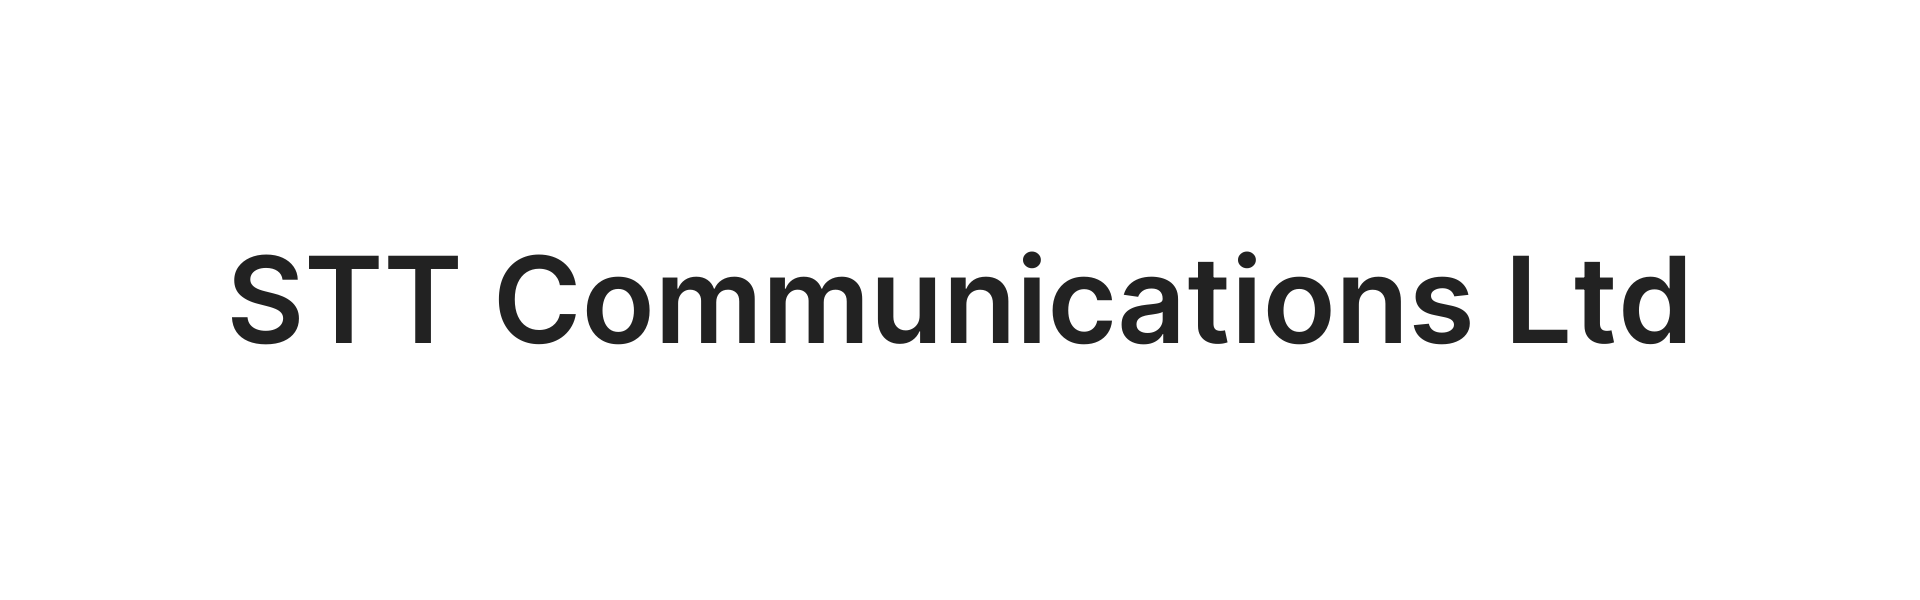 STT Communications Ltd